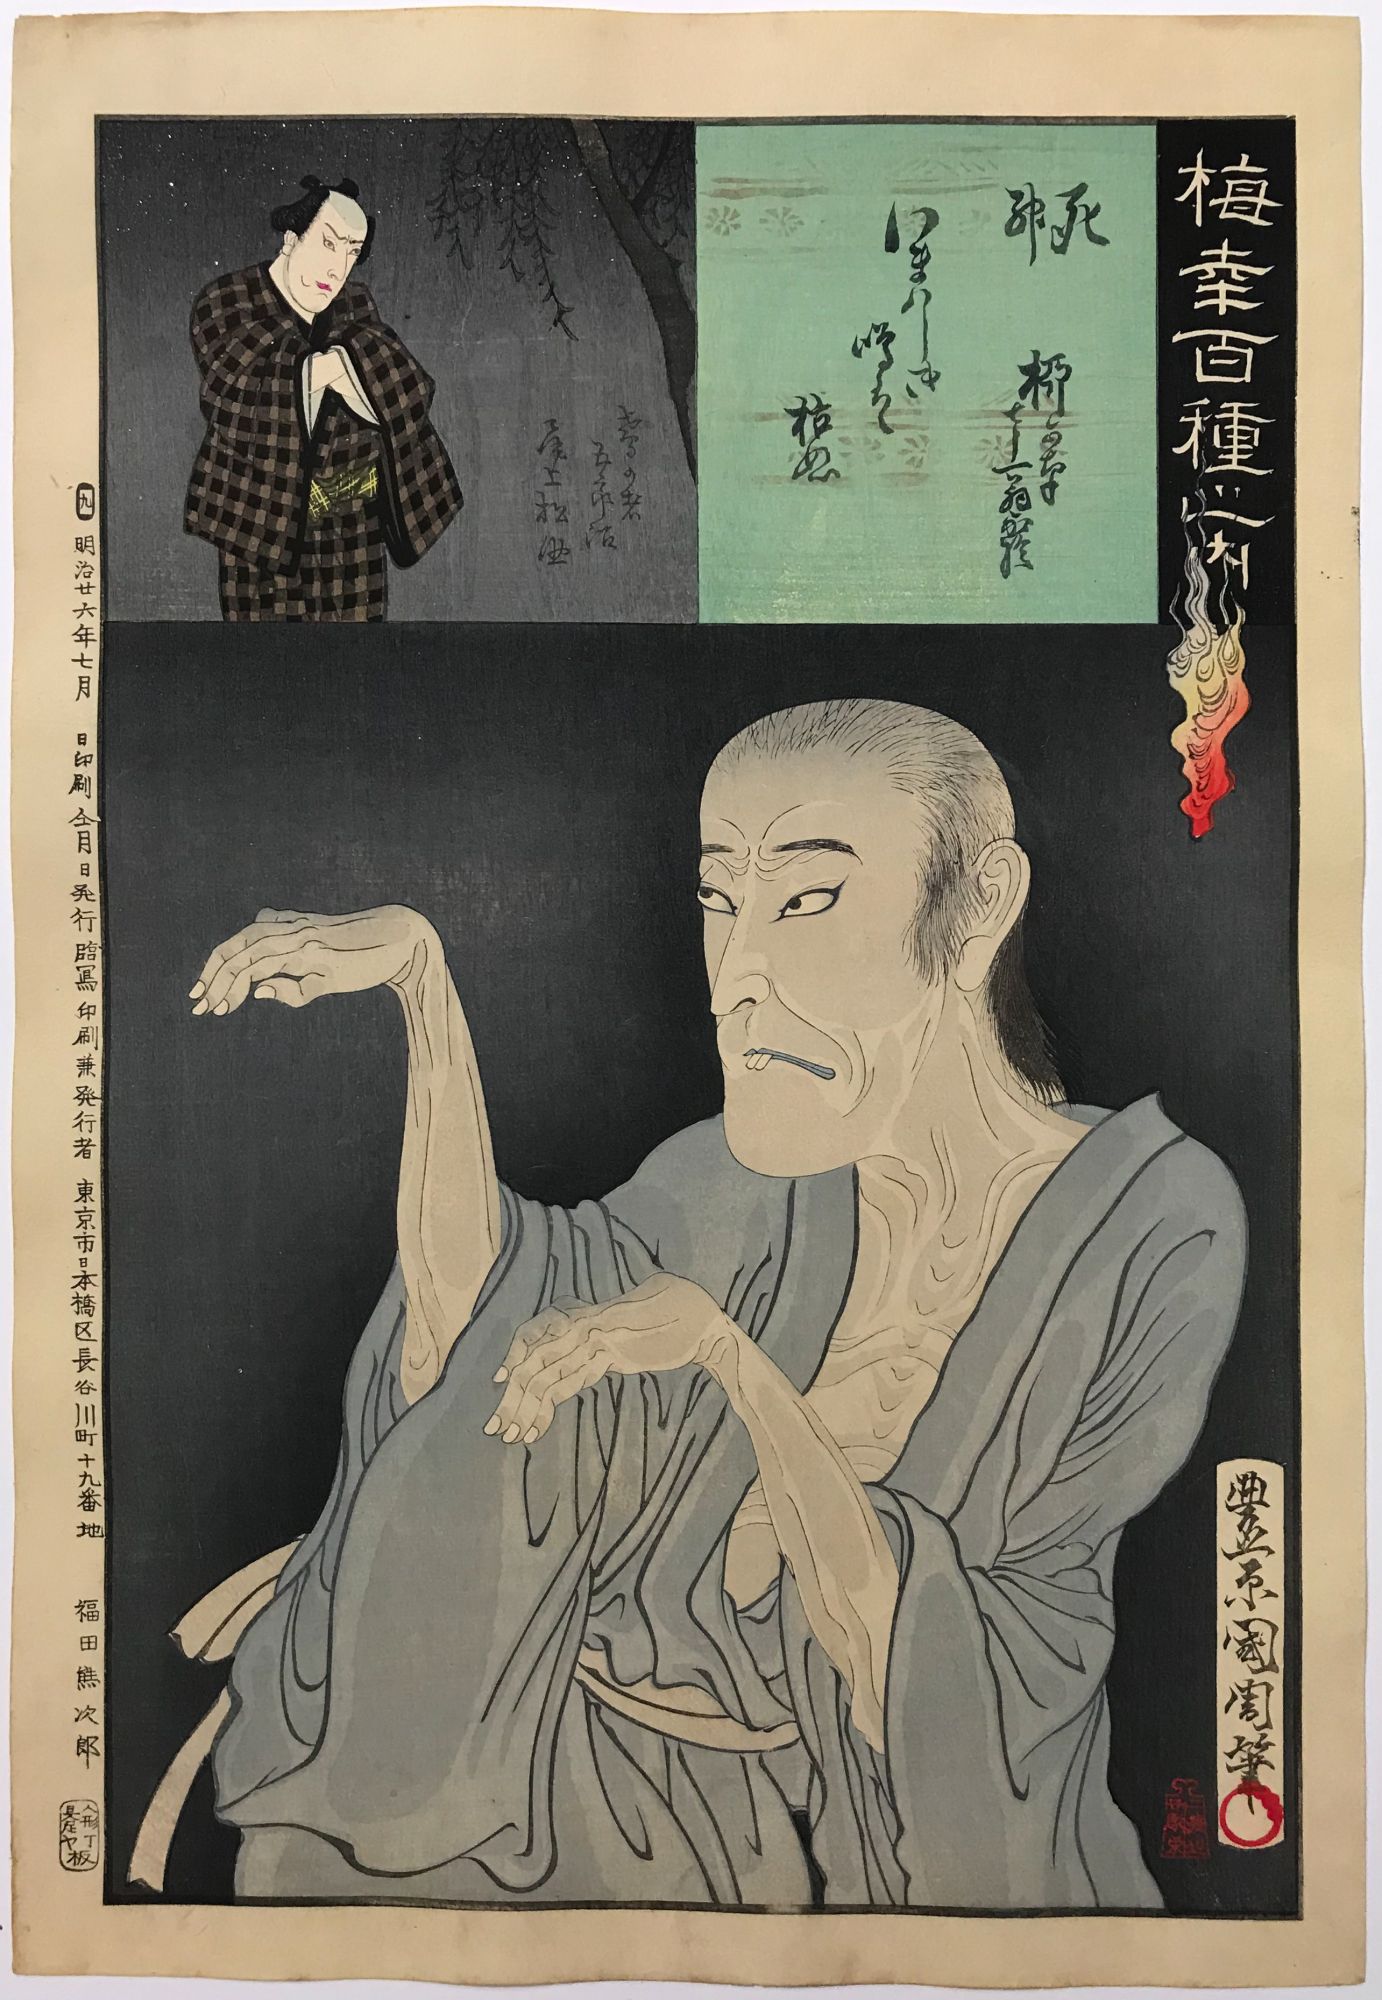 Shinigami, the god of death, 1893